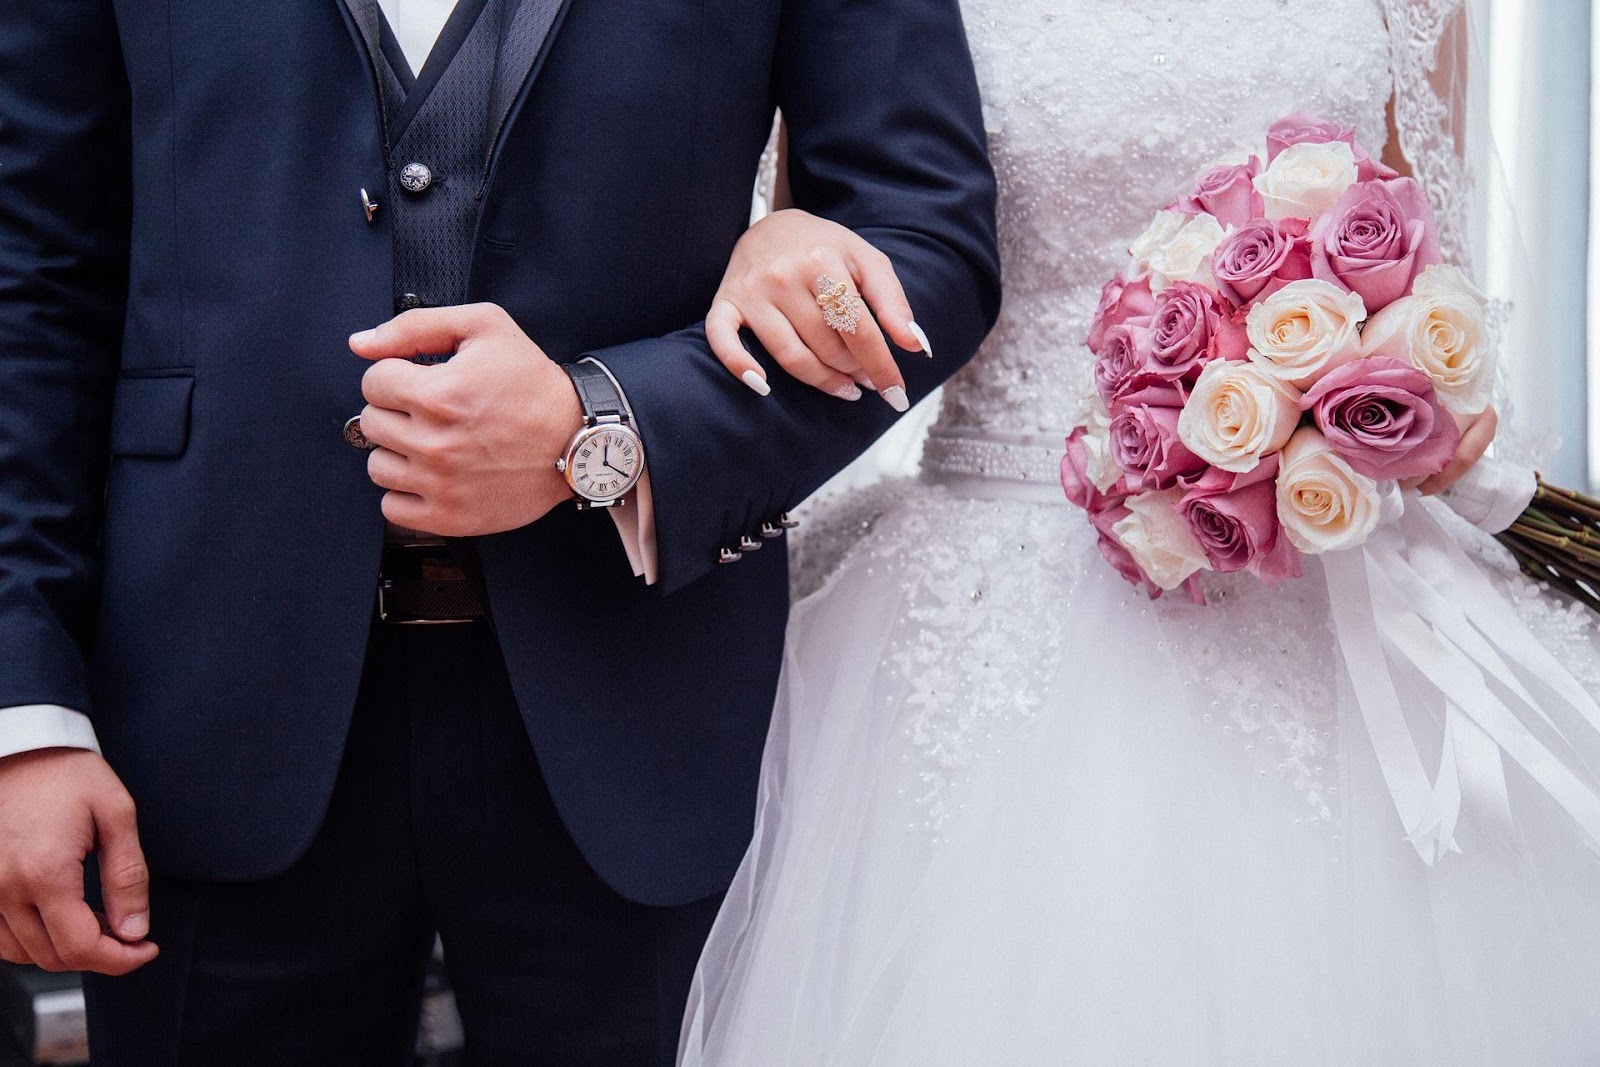 Cara Menjawab Pertanyaan 'Kapan Nikah' dari Sudut Pandang Islam - Sragen  Update